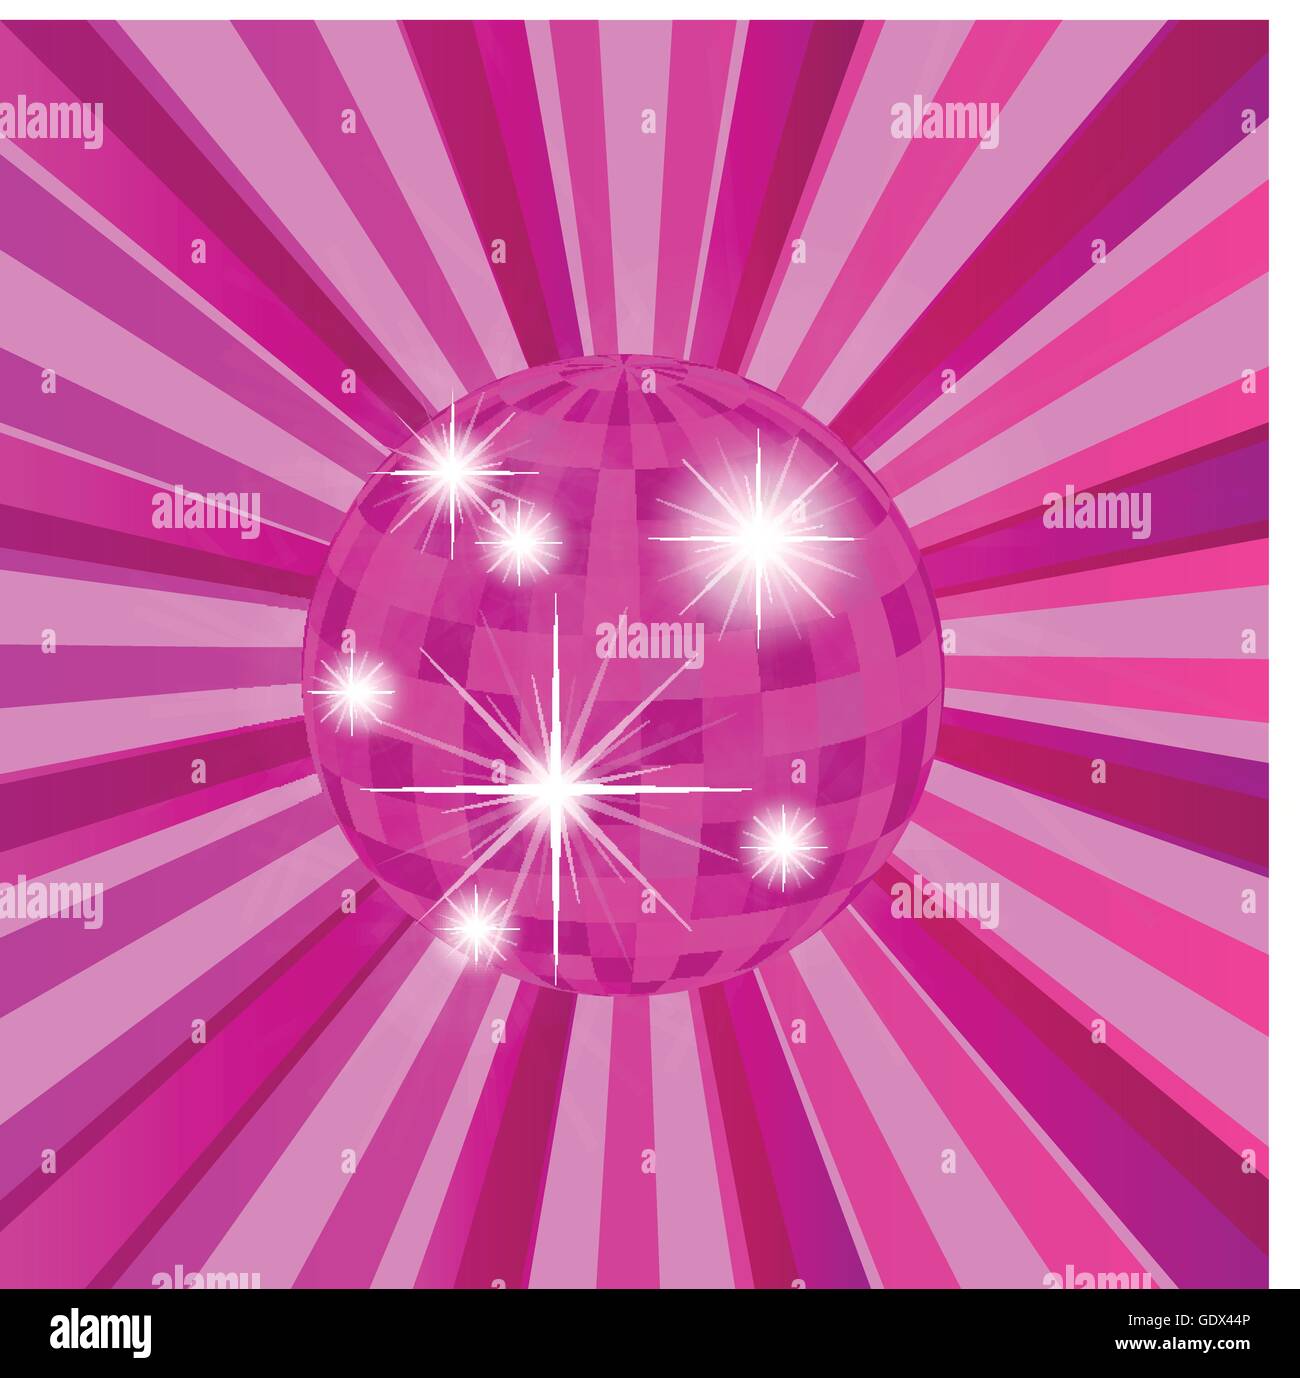 Abstract pink disco ball background Stock Vector by ©elaineitalia 7658967